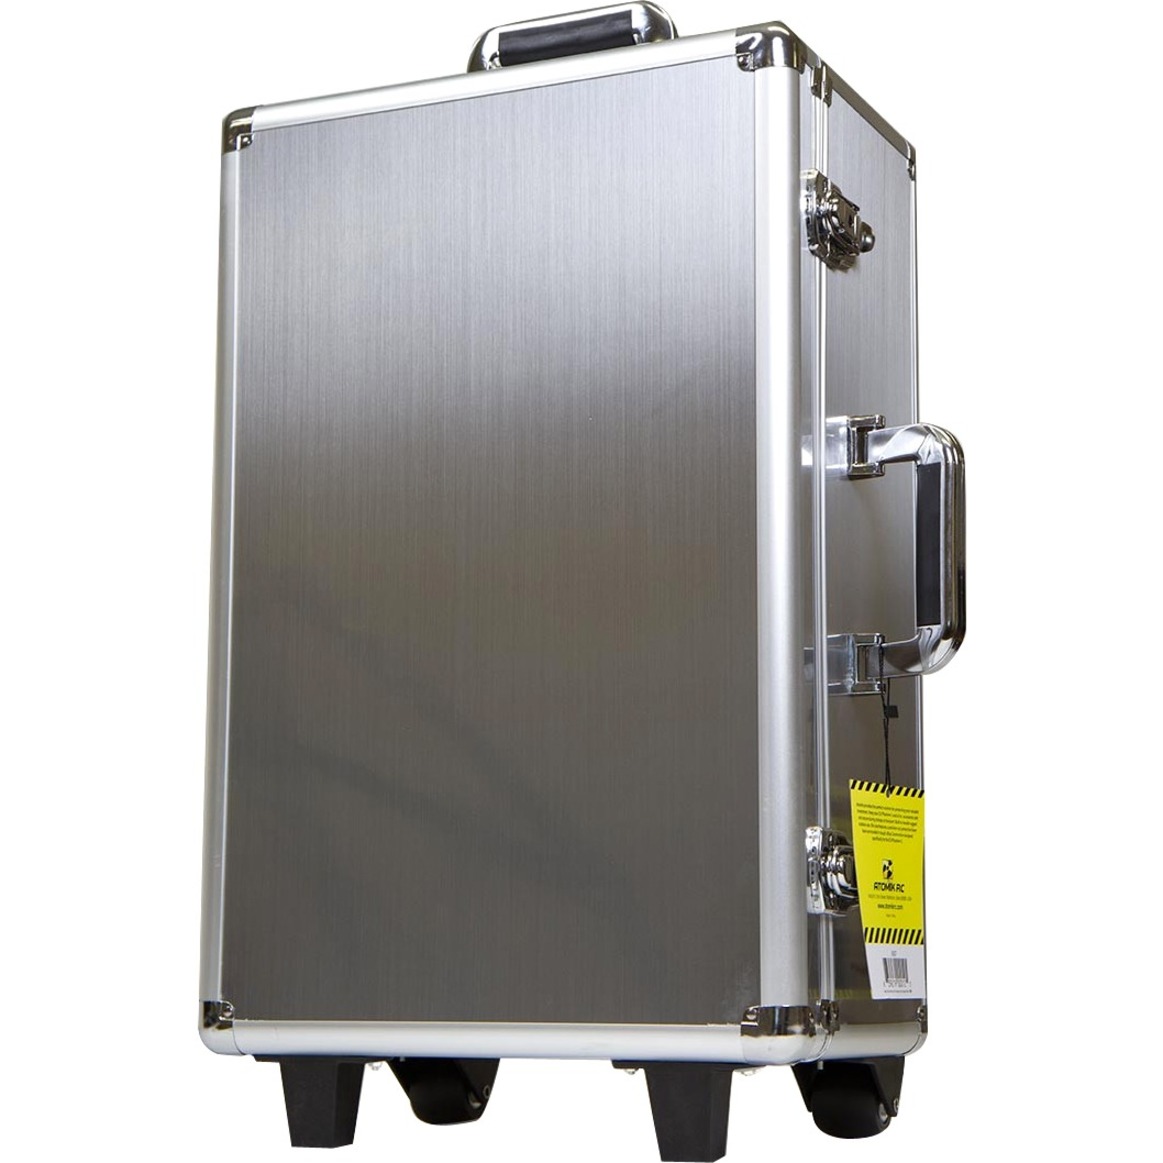 Atomik RC DJI Phantom 3 Professional Advanced RC Alloy Rolling Travel Hard Box Carry Case - image 1 of 6